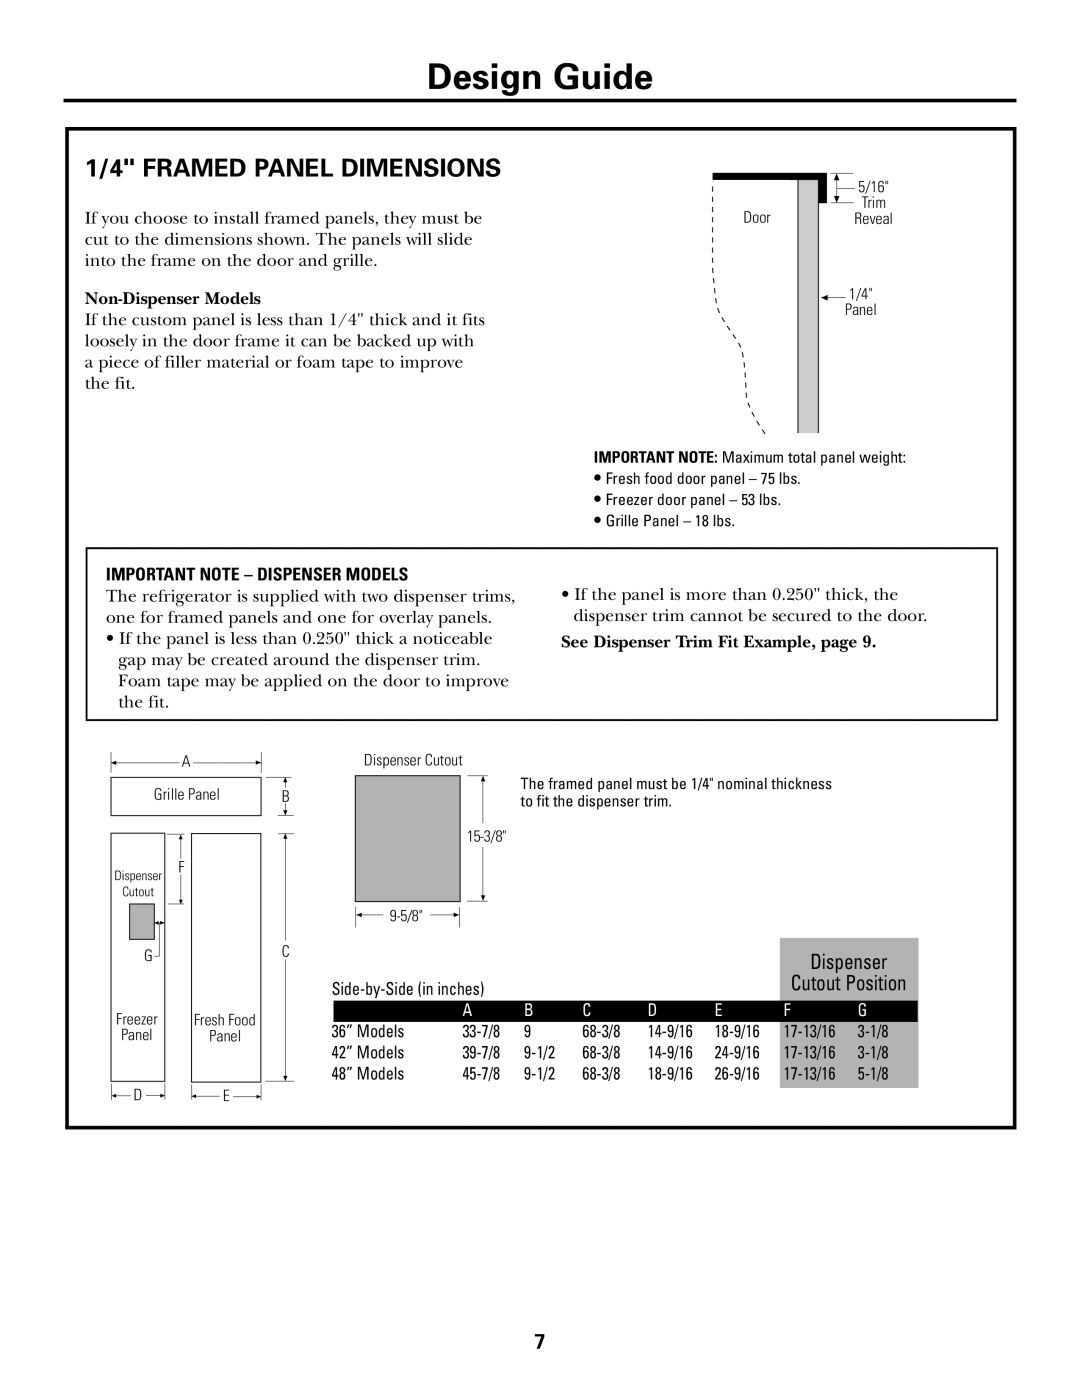 GE Monogram Side by Side Refrigerators 1/4 FRAMED PANEL DIMENSIONS, Cutout Position, Non-Dispenser Models 